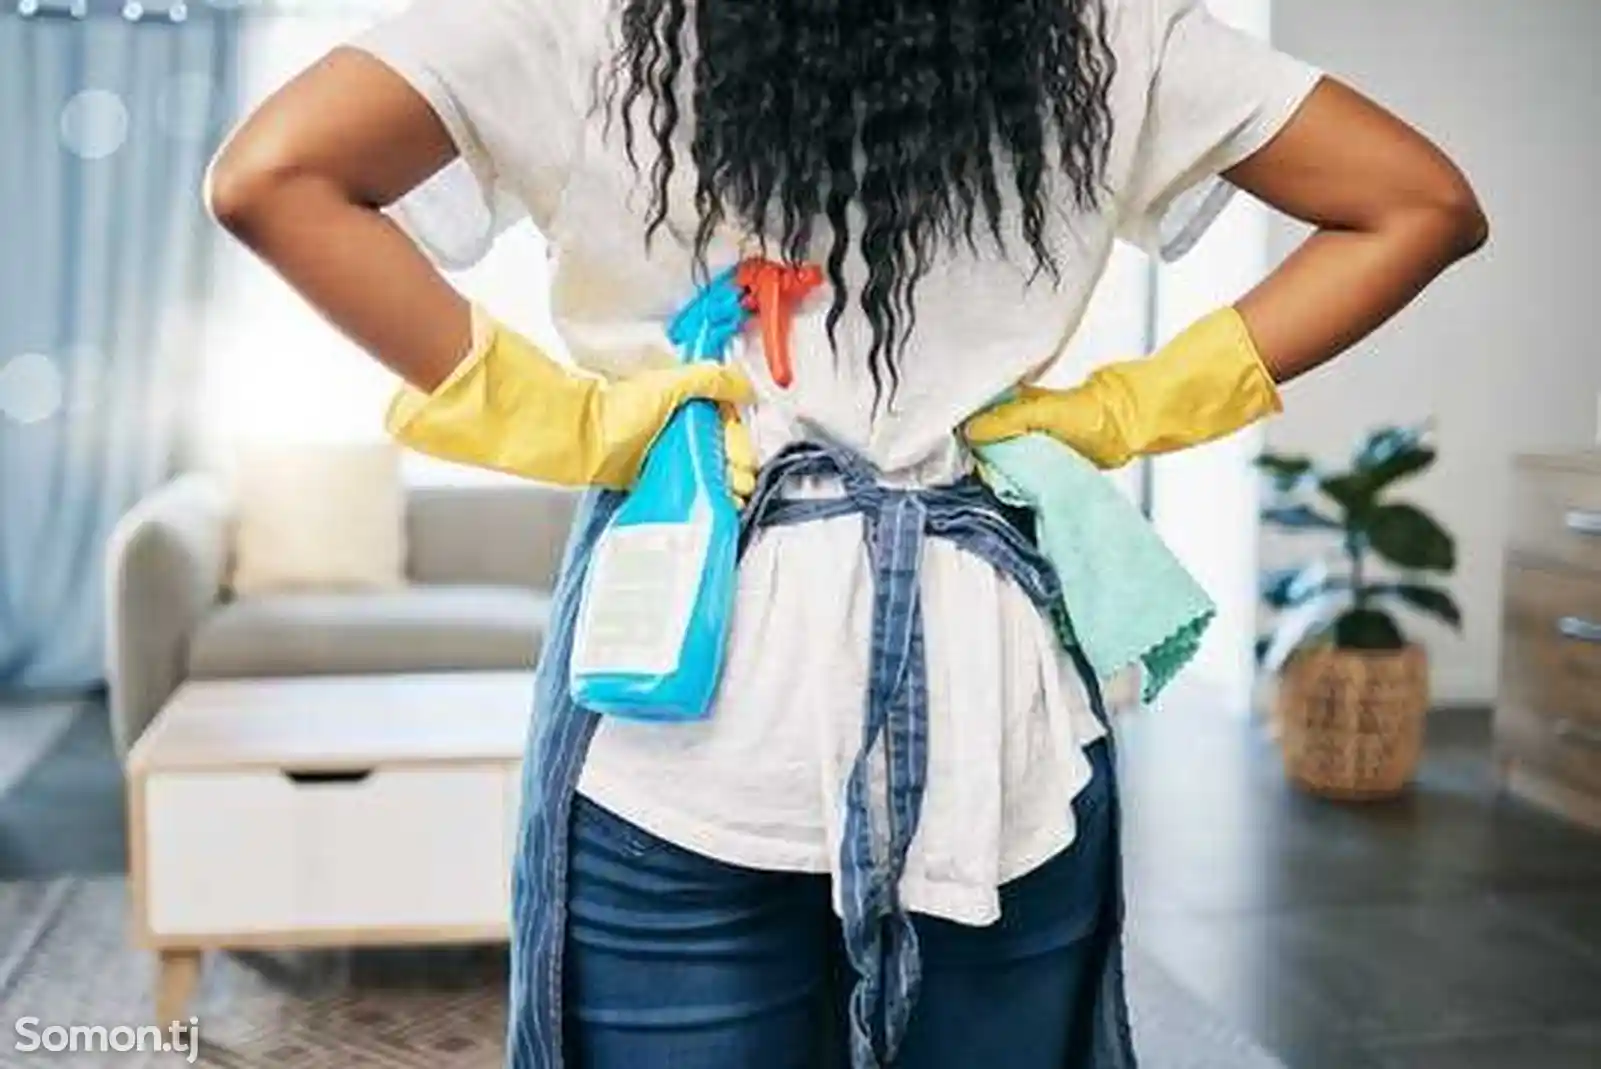 Услуги по уборке и чистке домов